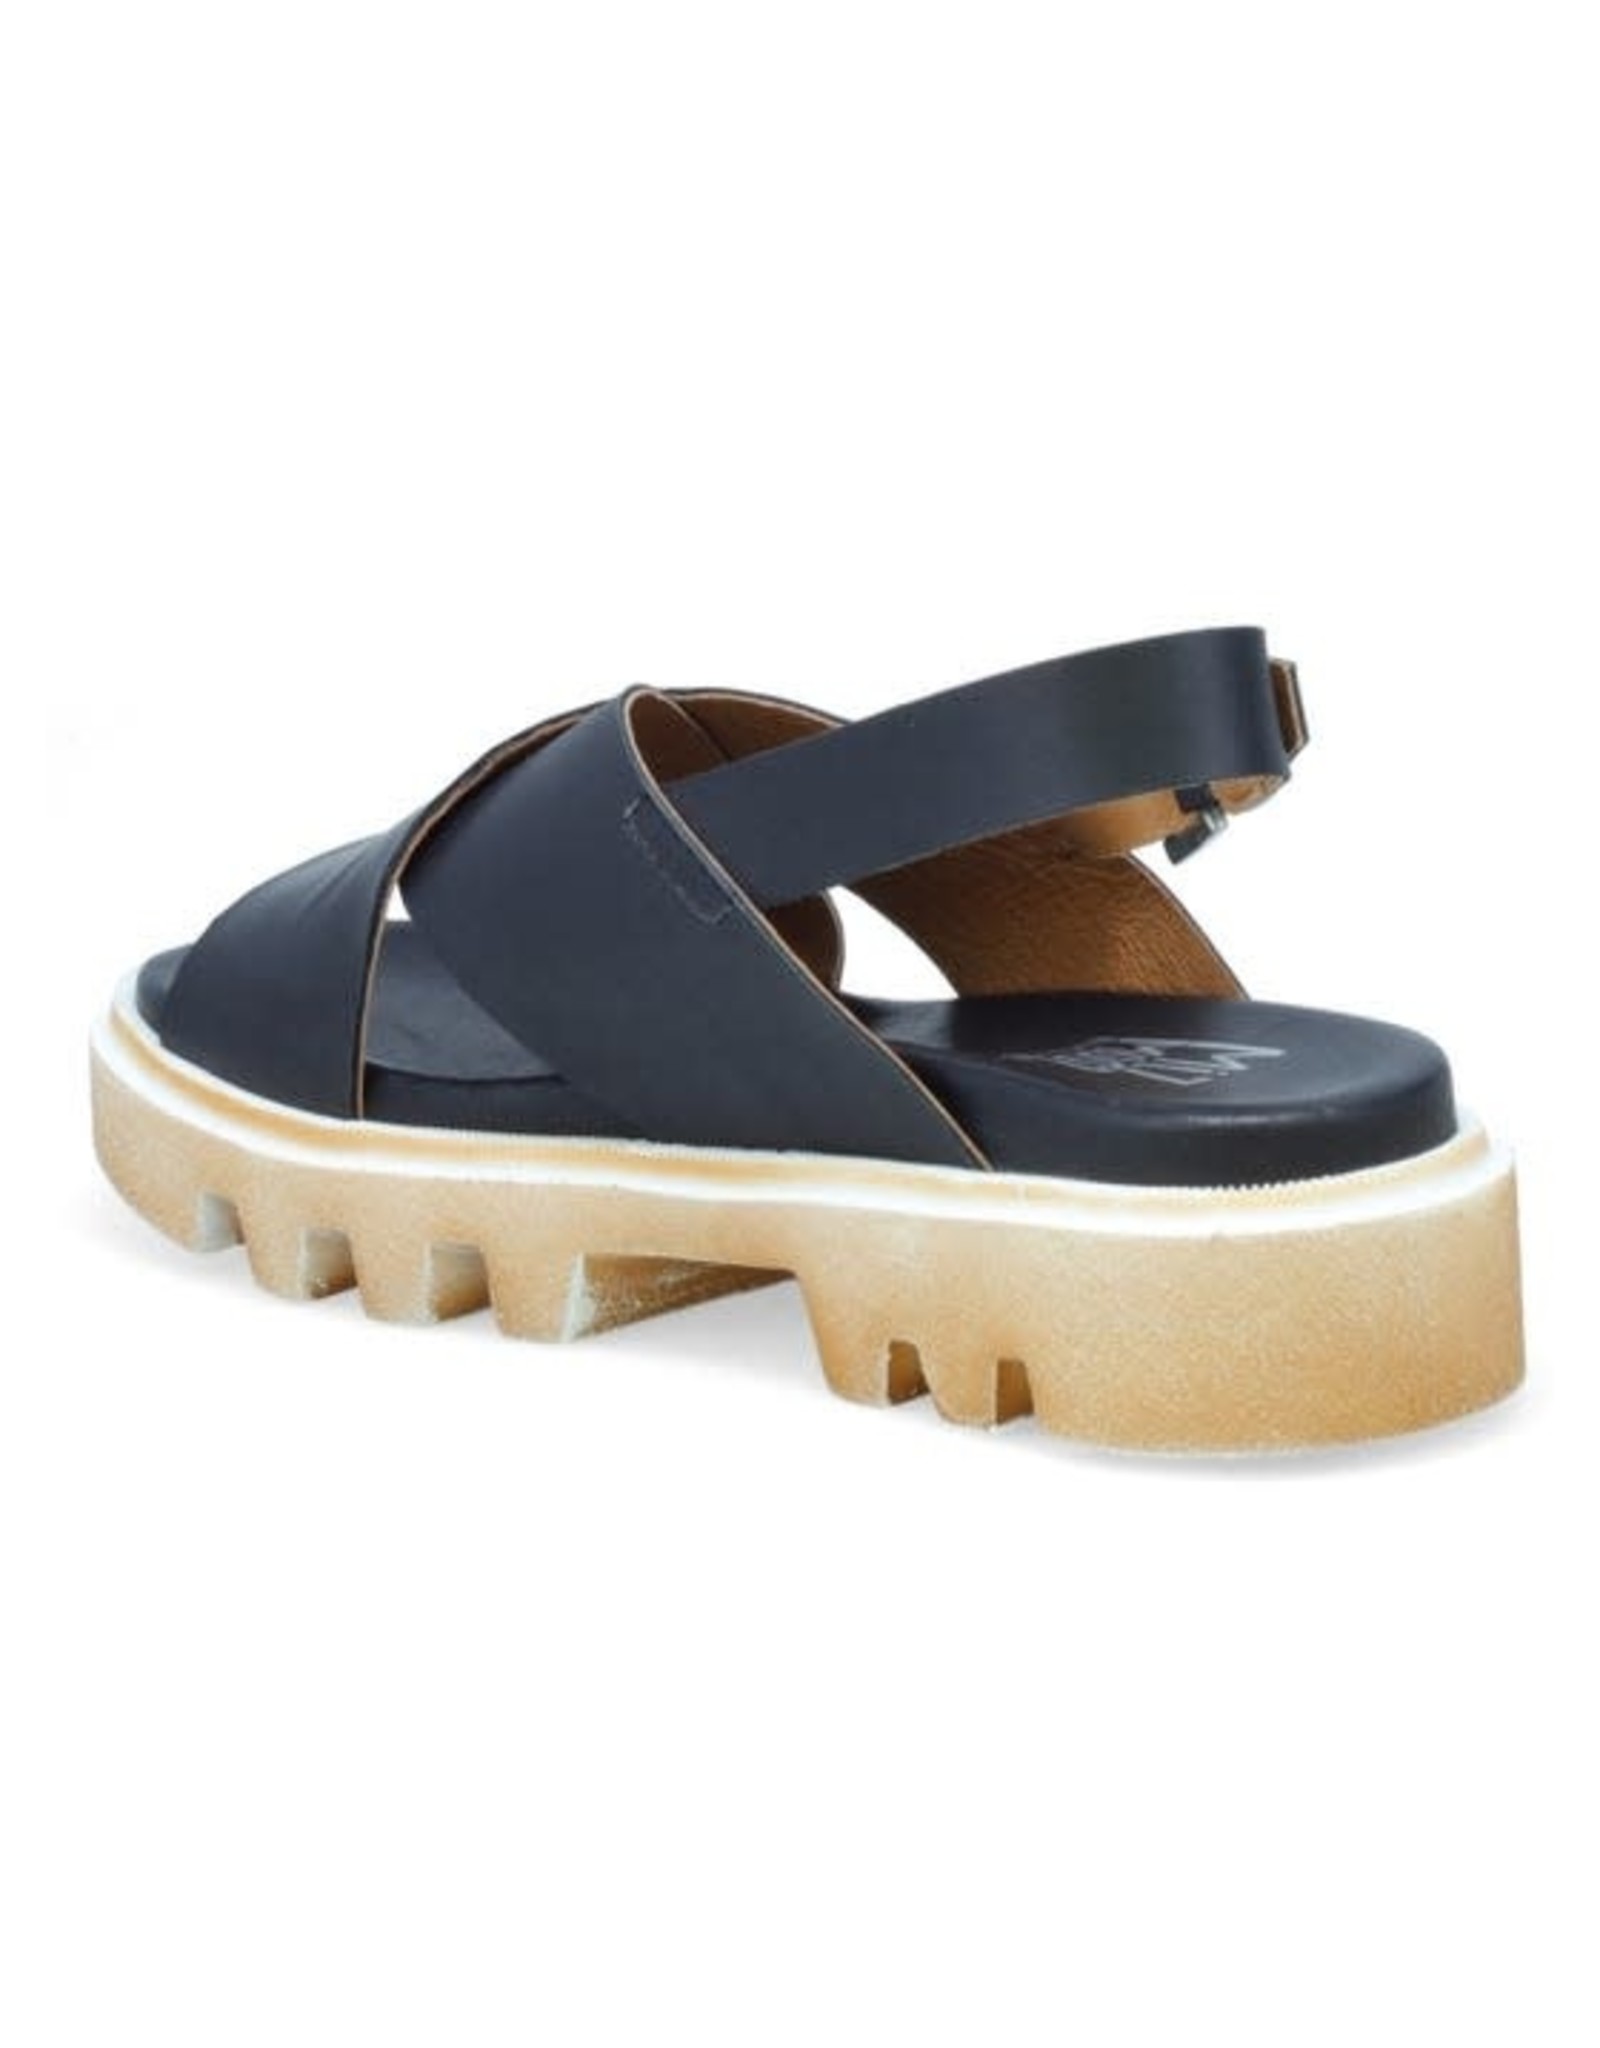 Miz Mooz Miz Mooz - Pacific platform sandal (black)